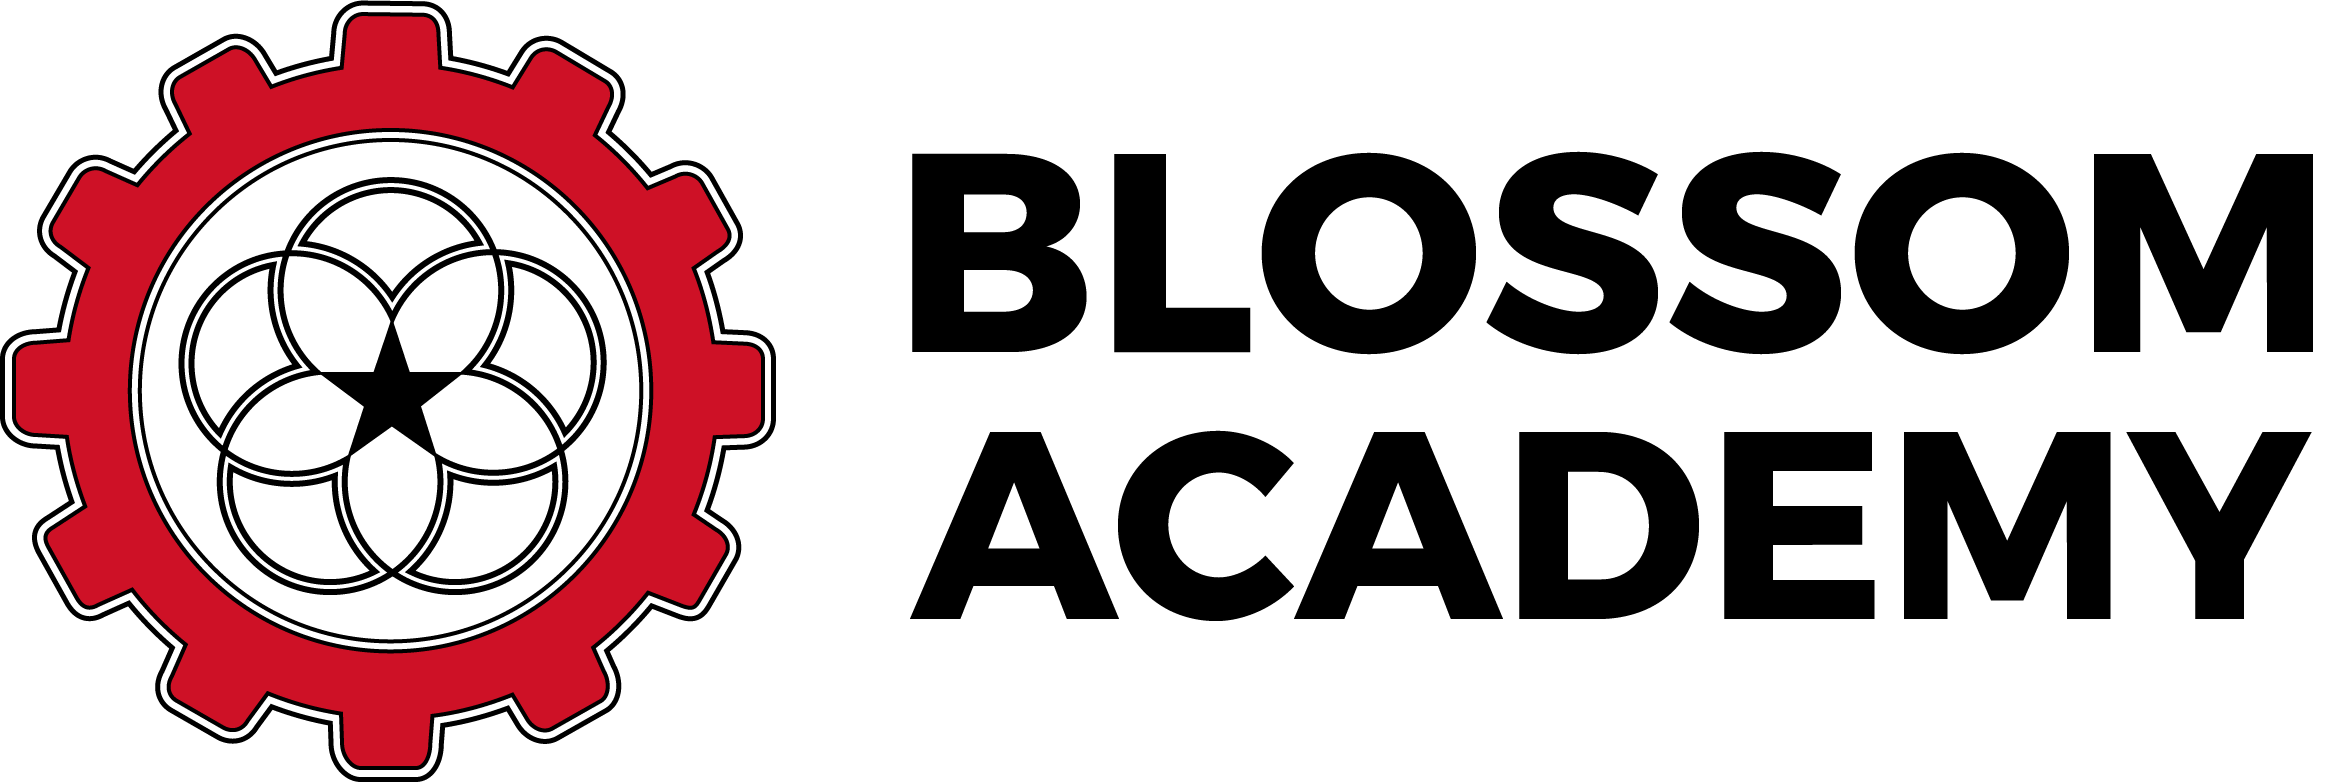 Blossom Academy